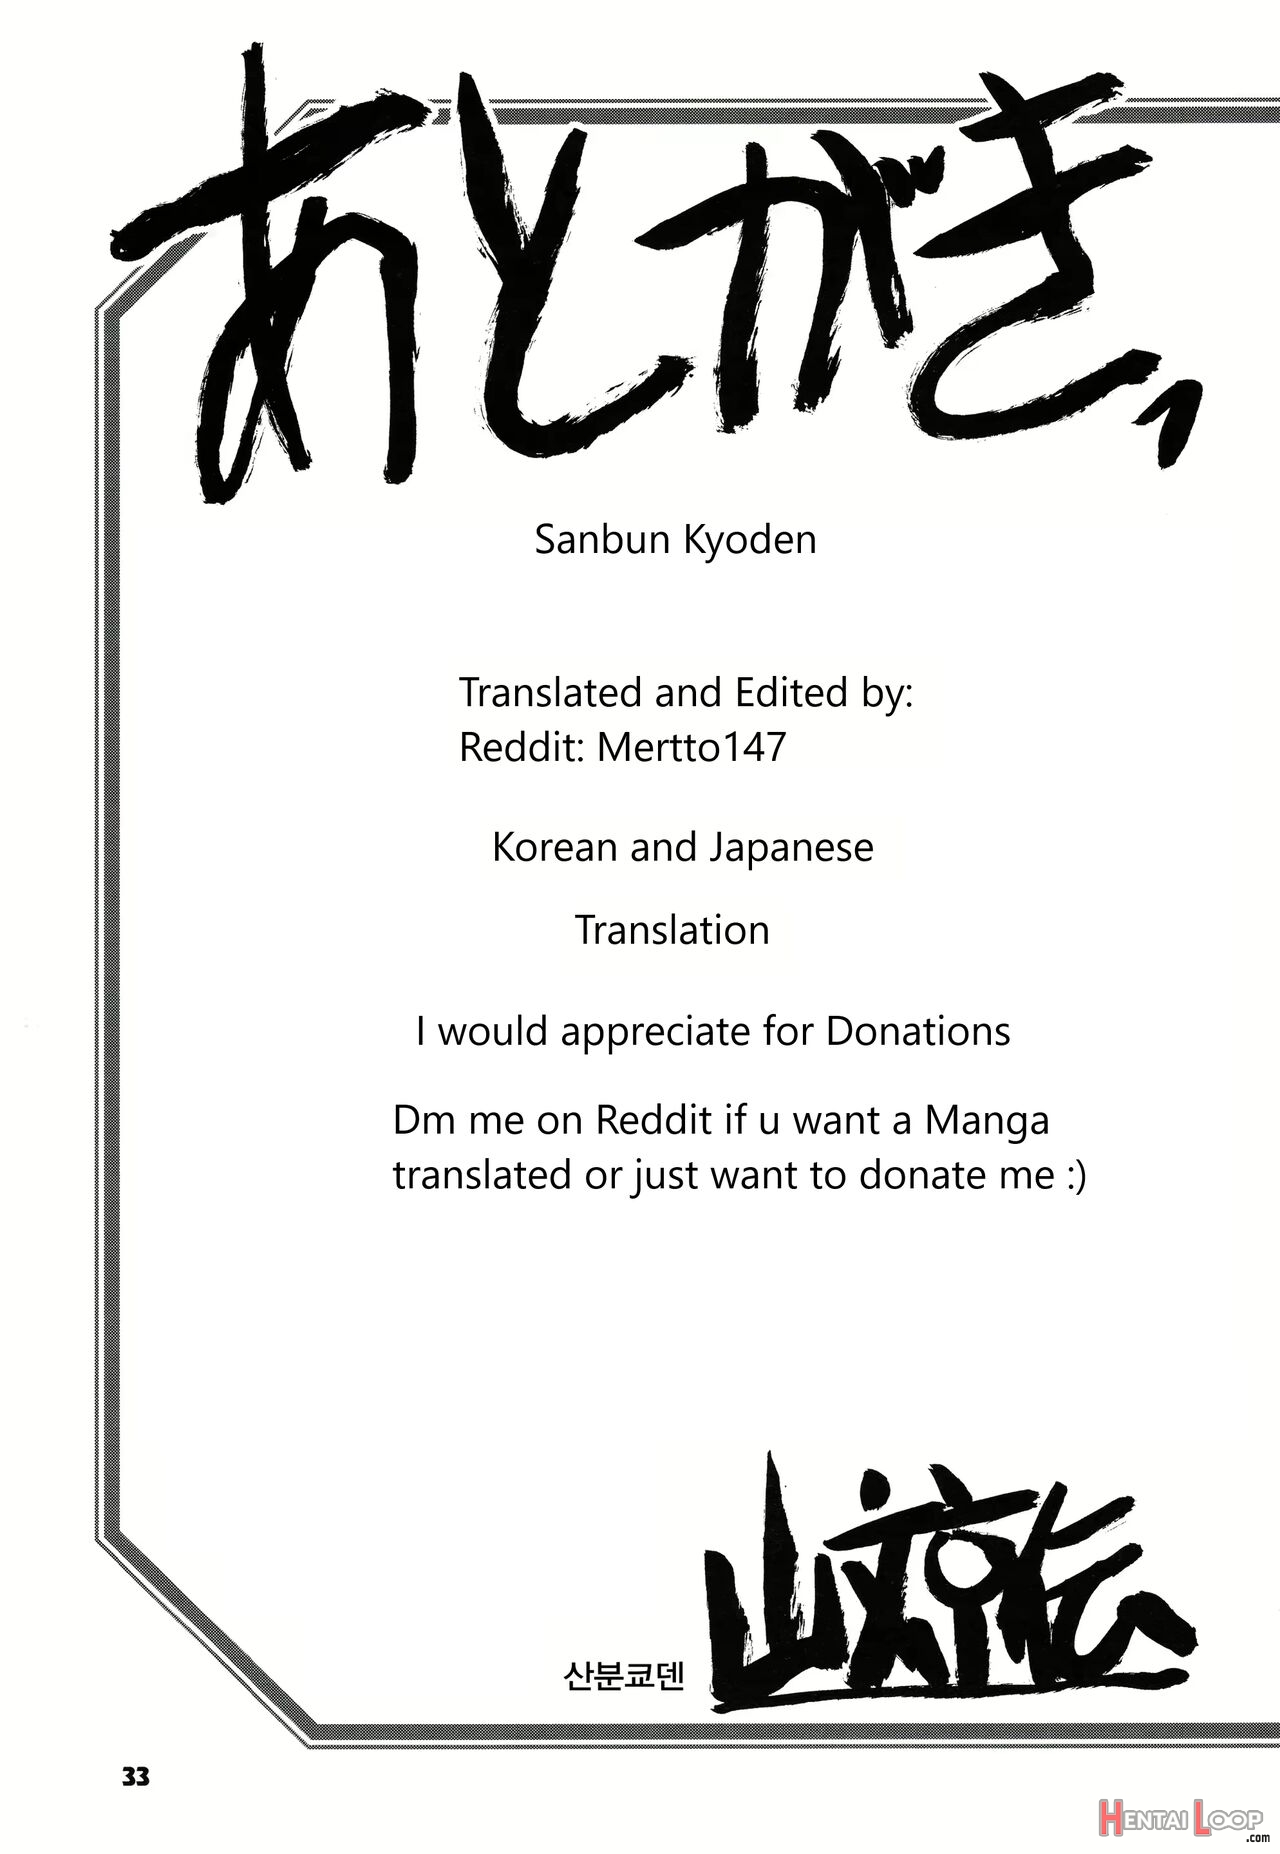 Sanbun Kyoden - Akebi No Mi - Fumiko Continuation page 31